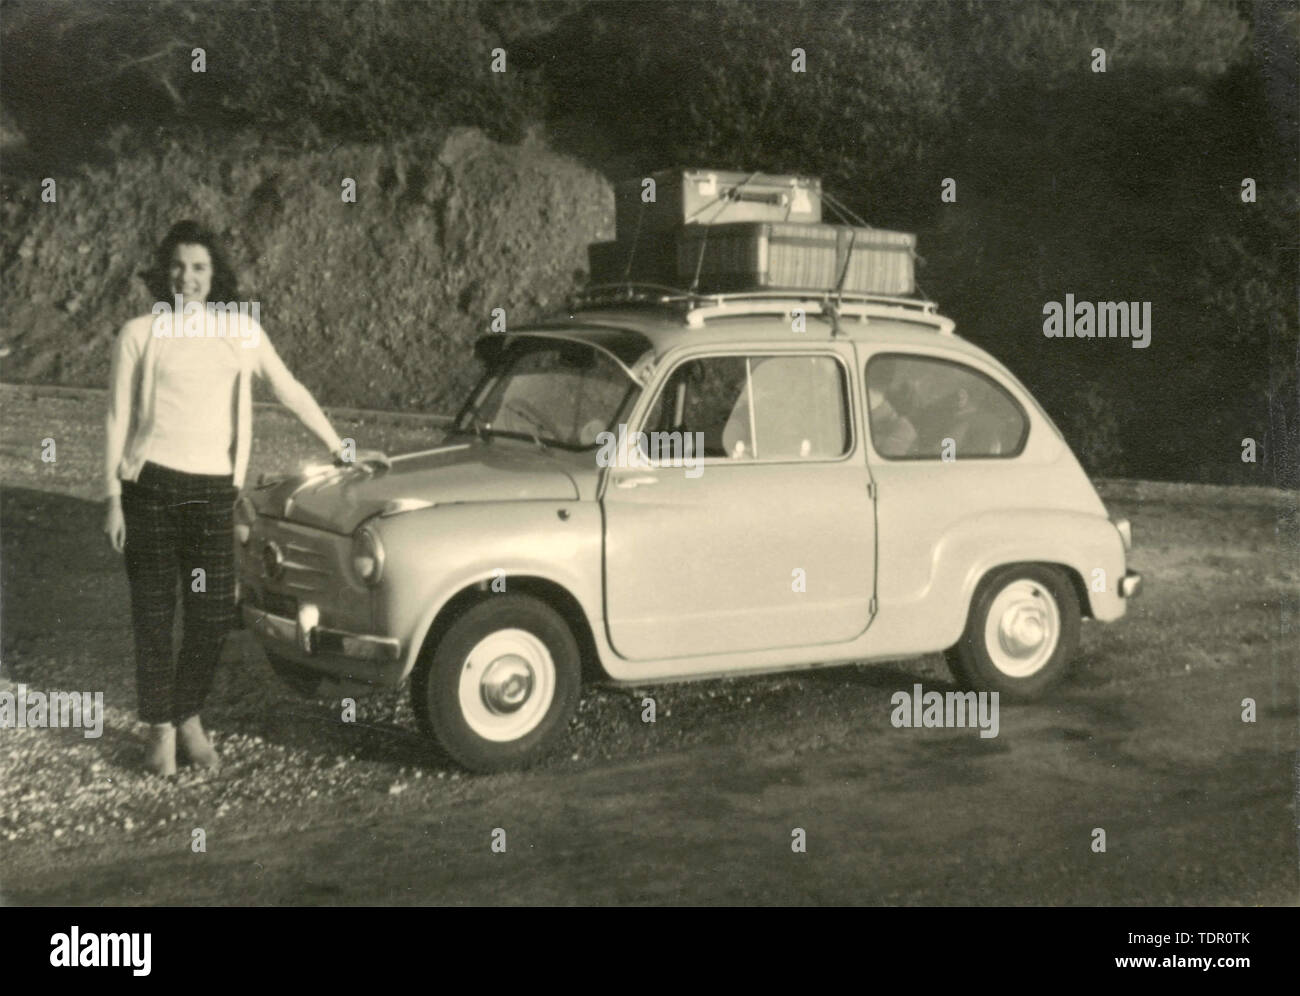 Holidays with the FIAT 600 car, Italy 1960s Stock Photo